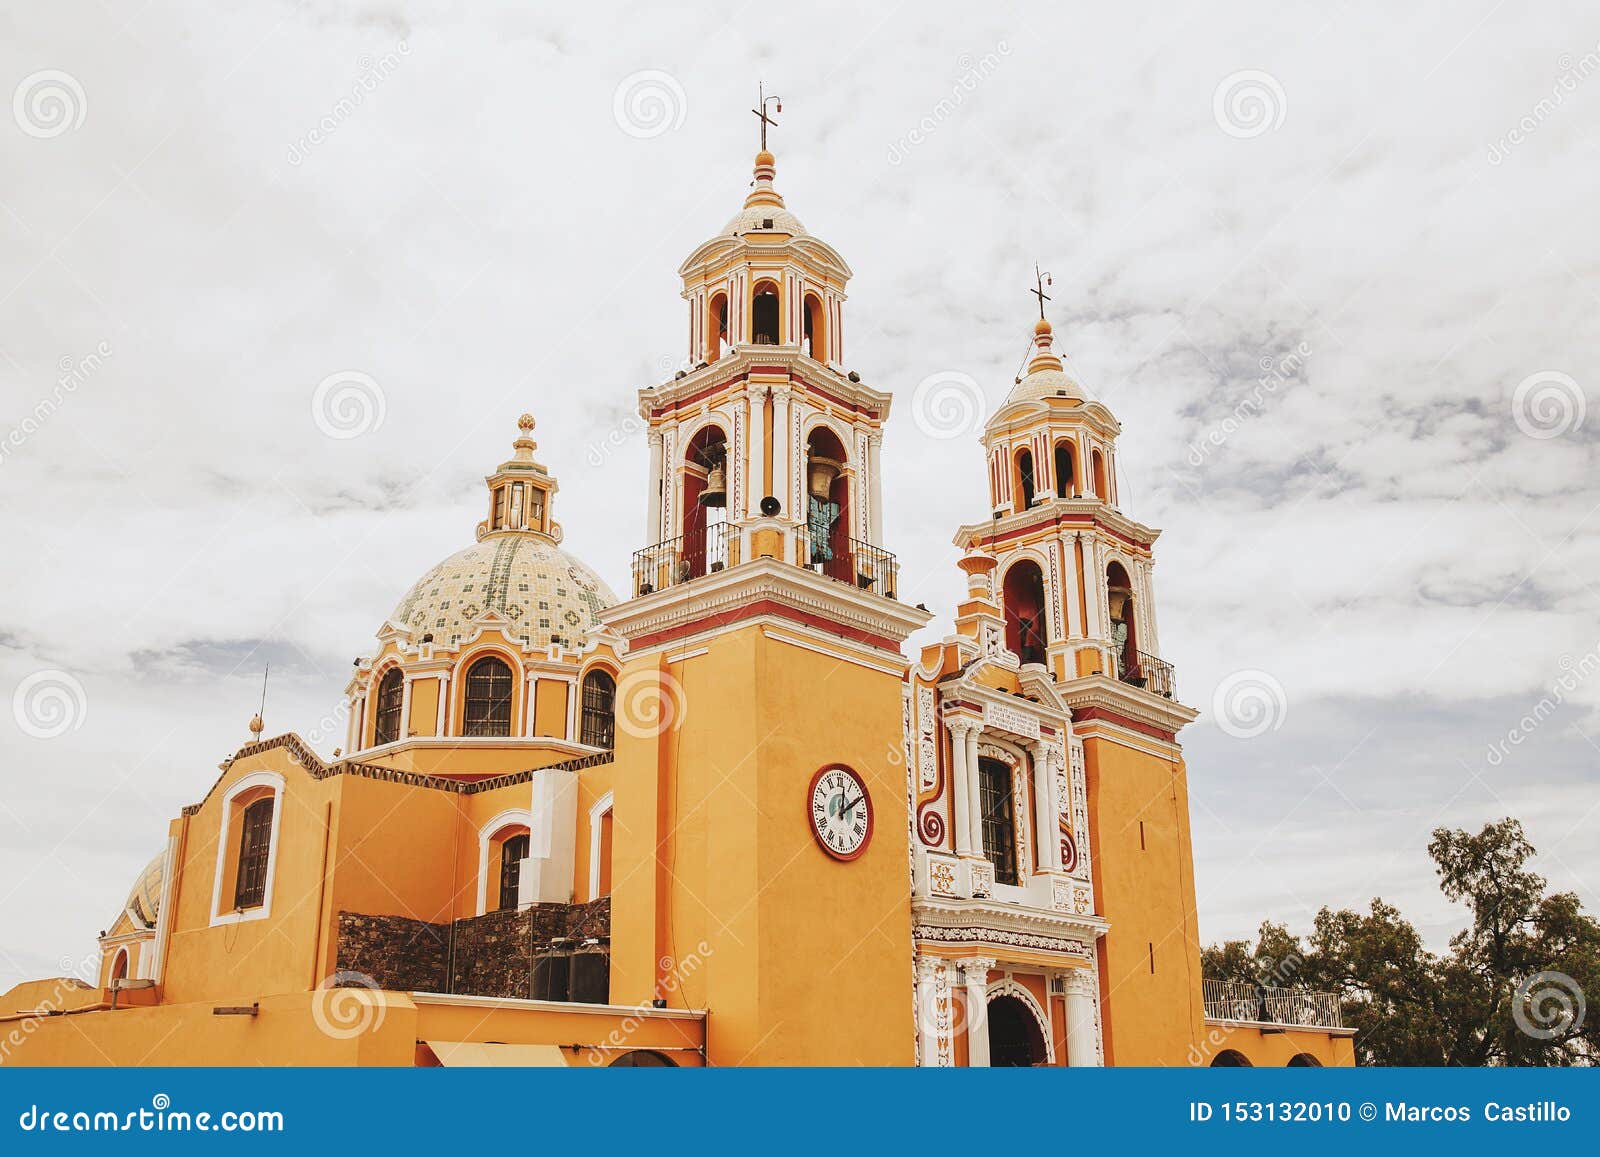 mexican church, iglesia cholula puebla mexico